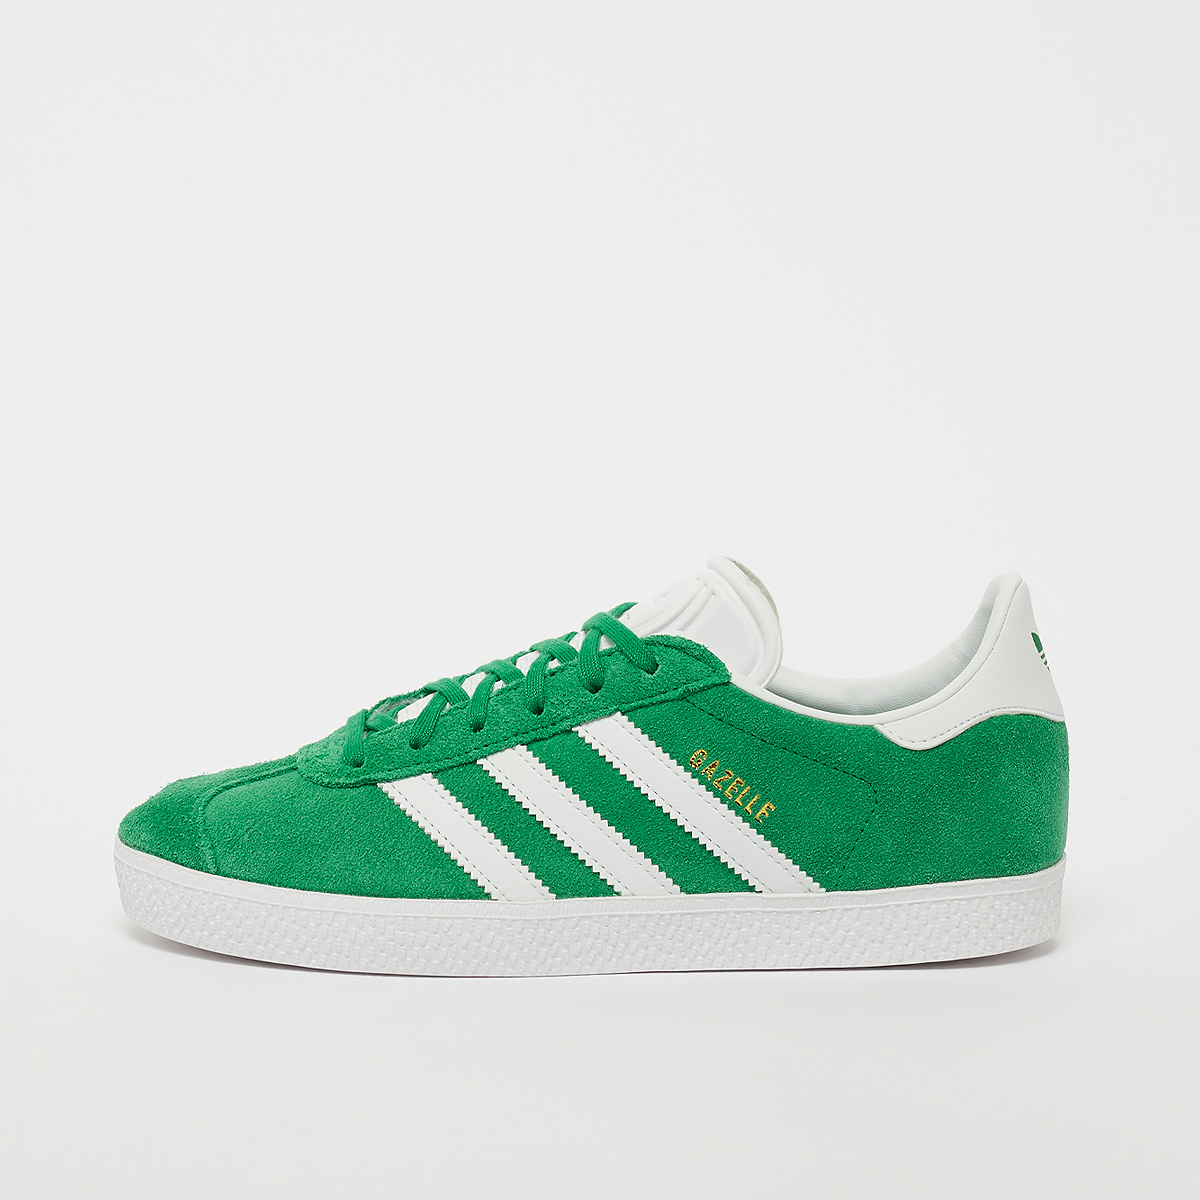 Sneaker Gazelle J, adidas Originals, Footwear, linen green/ftwr white/gold met., taille: 36